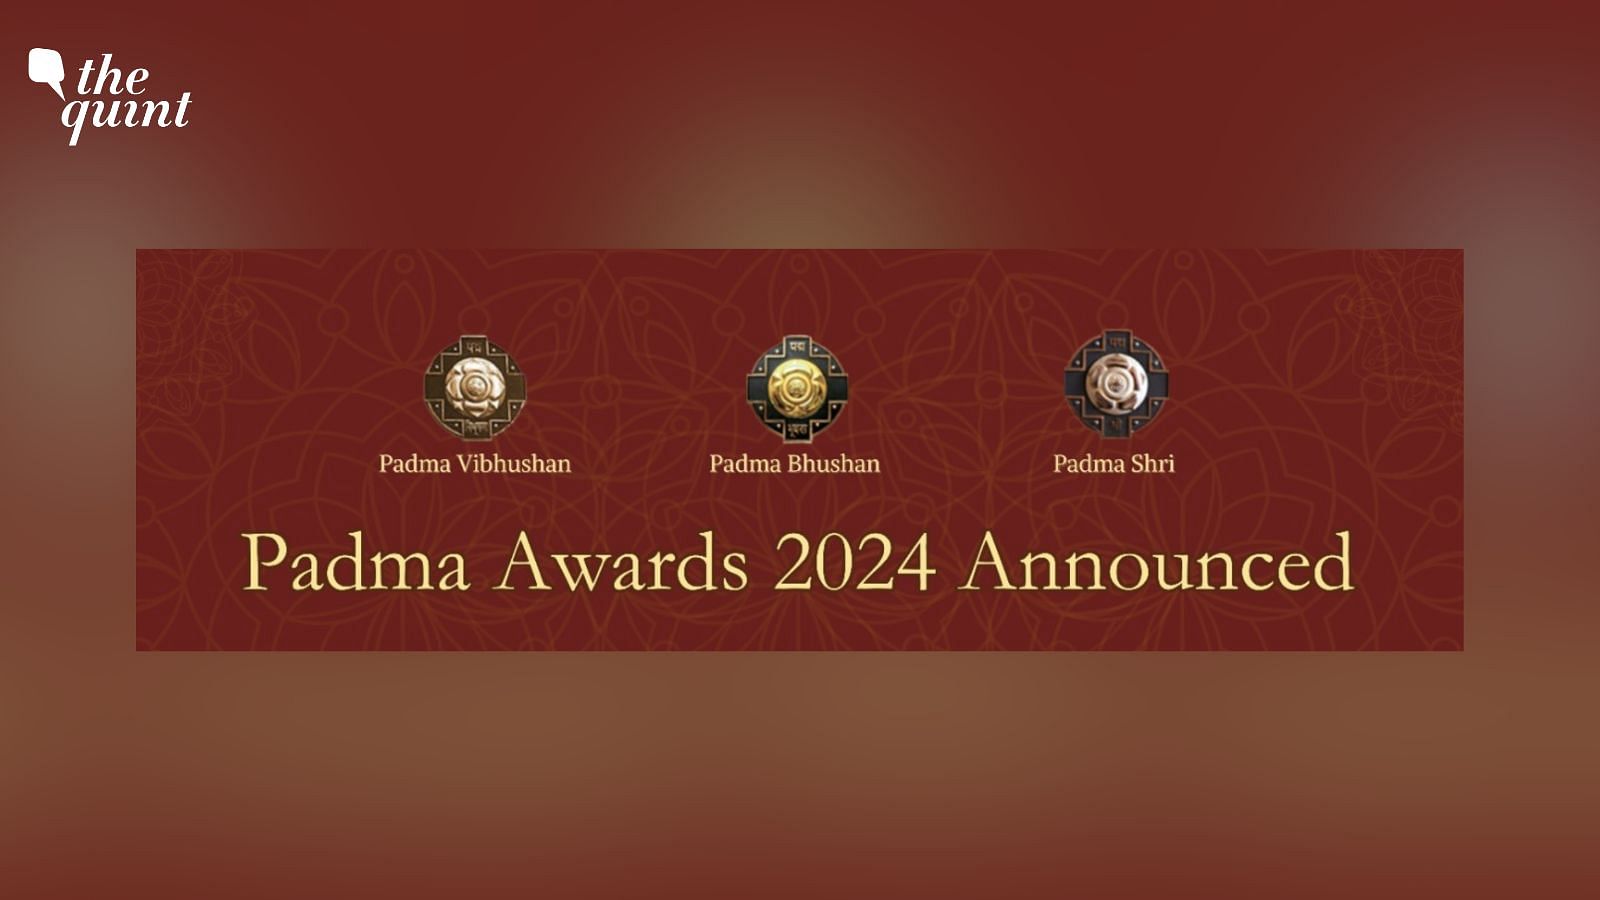 <div class="paragraphs"><p>In Photos: Padma Shri Awards 2024 Recipients Announced, Full List of Names</p></div>